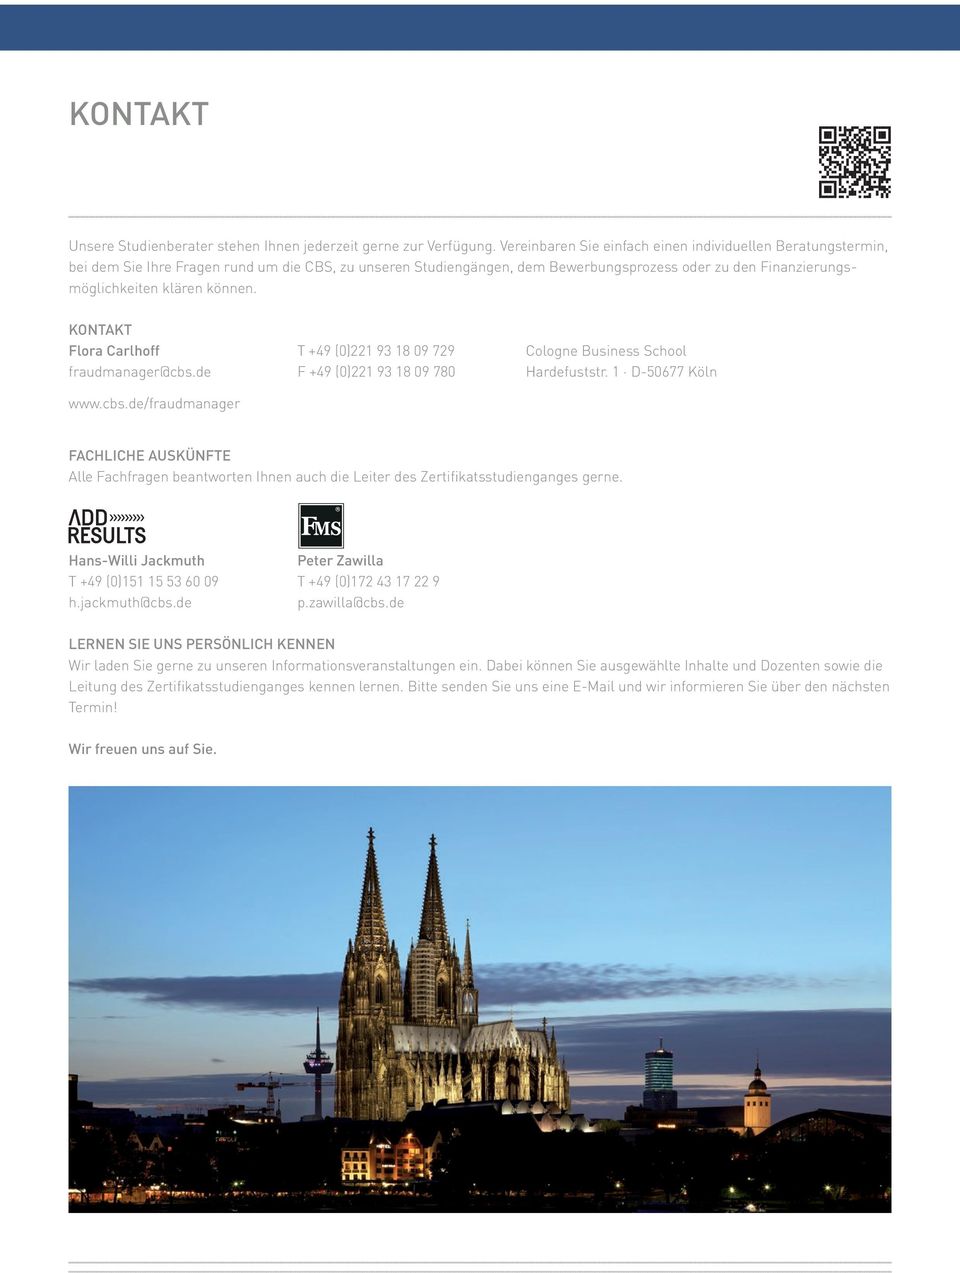 können. KONTAKT Flora Carlhoff T +49 (0)221 93 18 09 729 Cologne Business School fraudmanager@cbs.